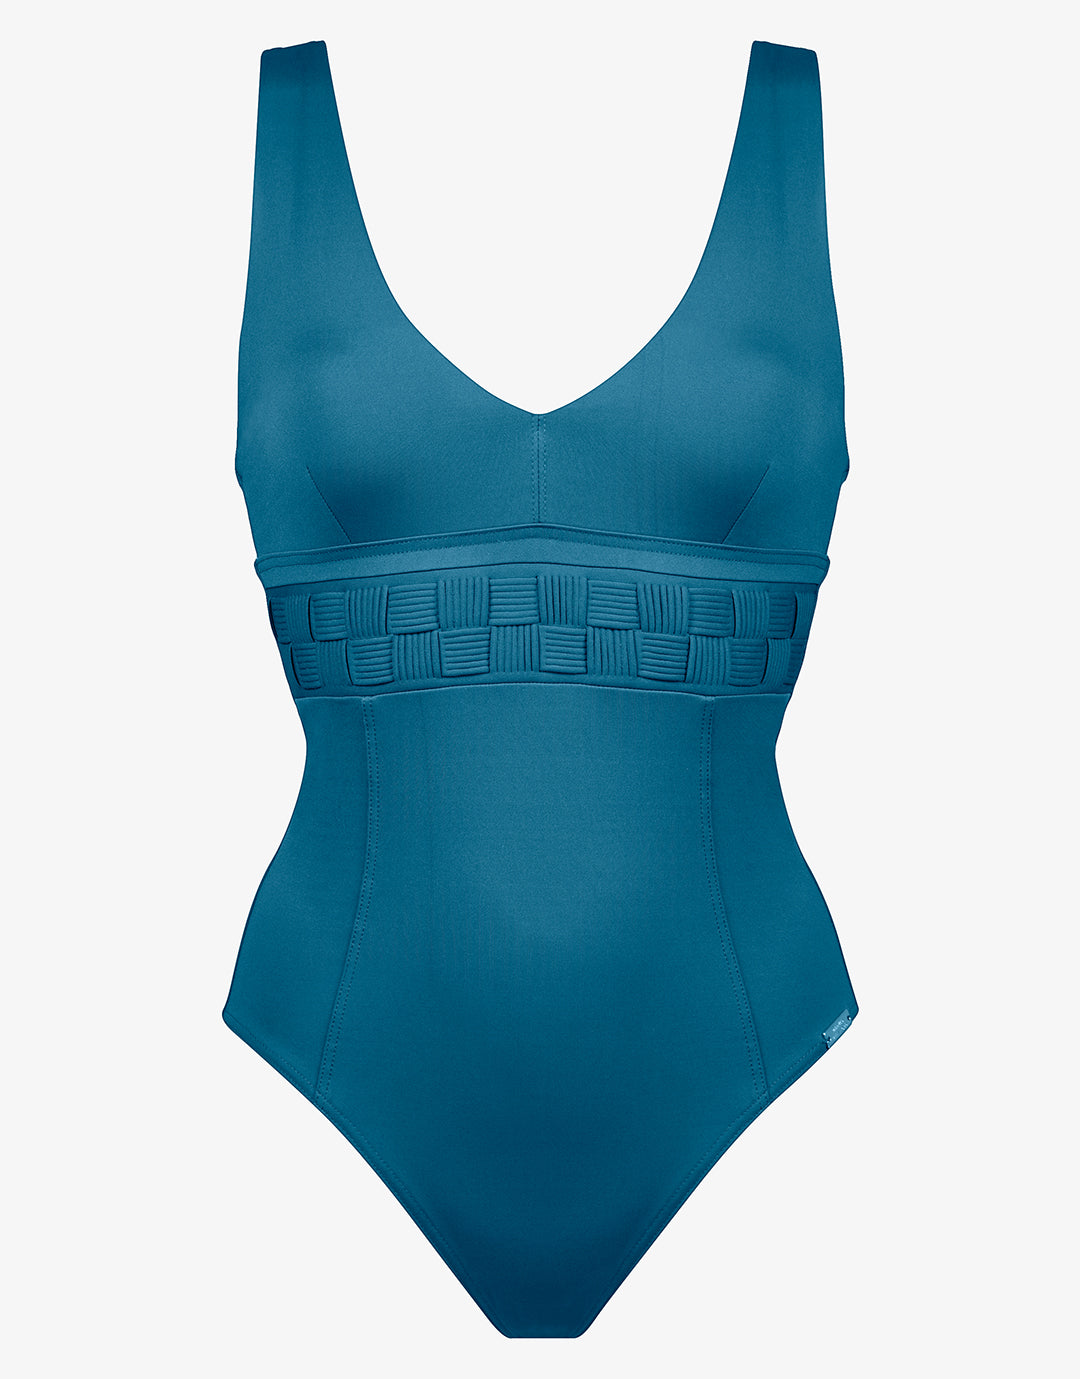 Softline V Neck Swimsuit - Mosaic Blue - Simply Beach UK